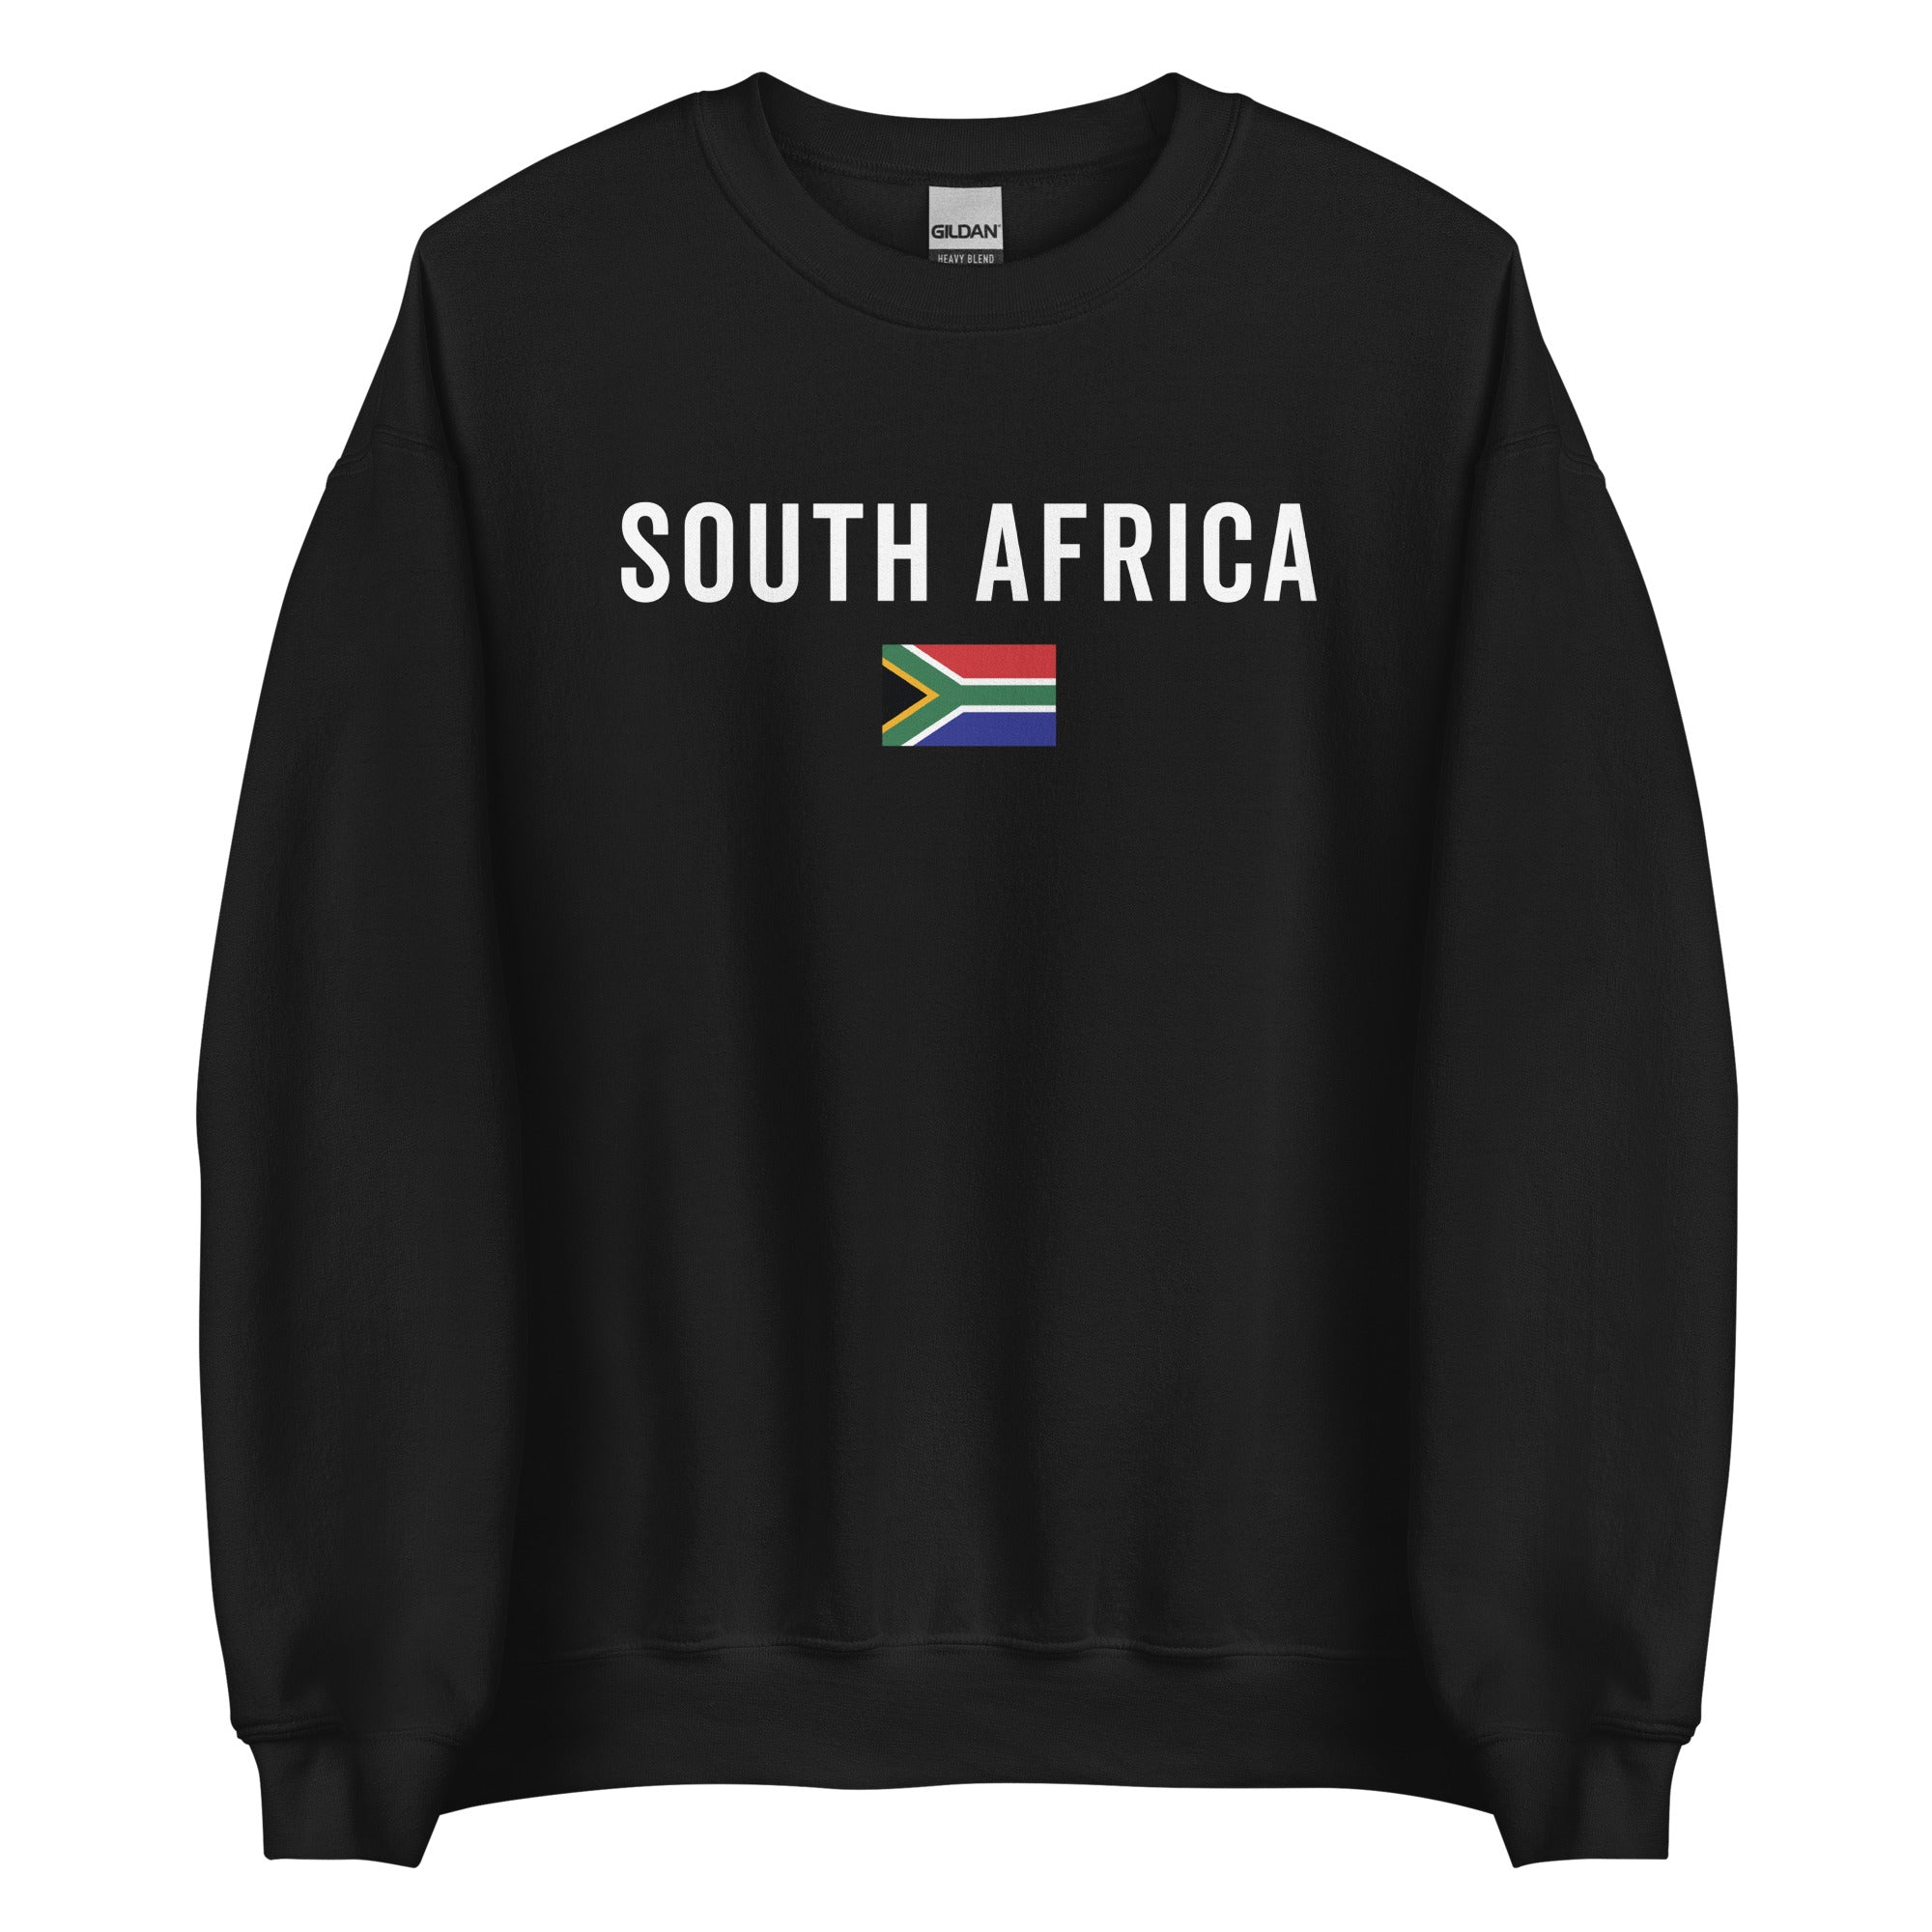 South Africa Flag Sweatshirt